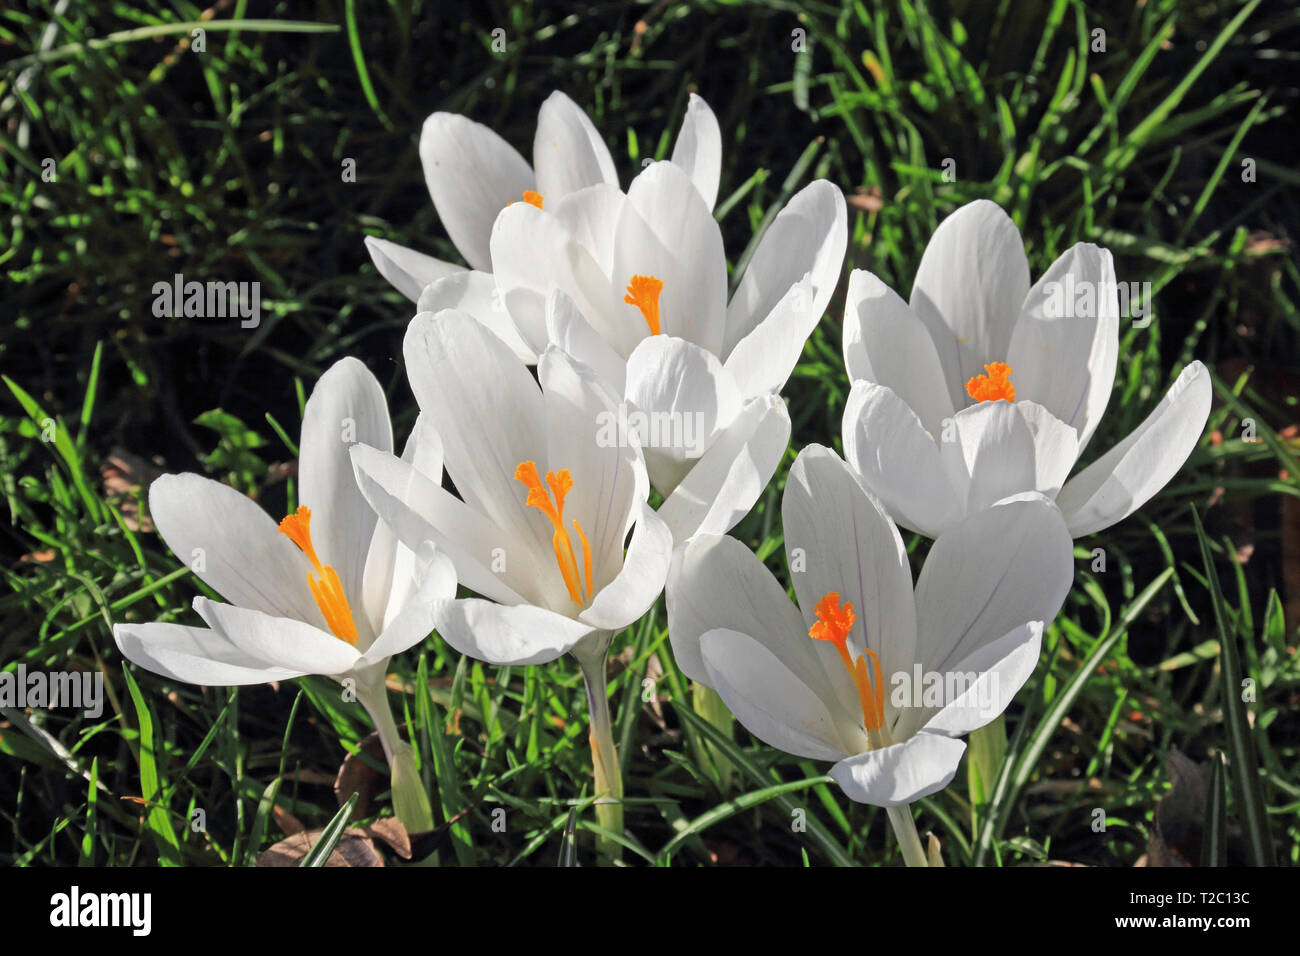 Group of six White crocus flowers Stock Photo